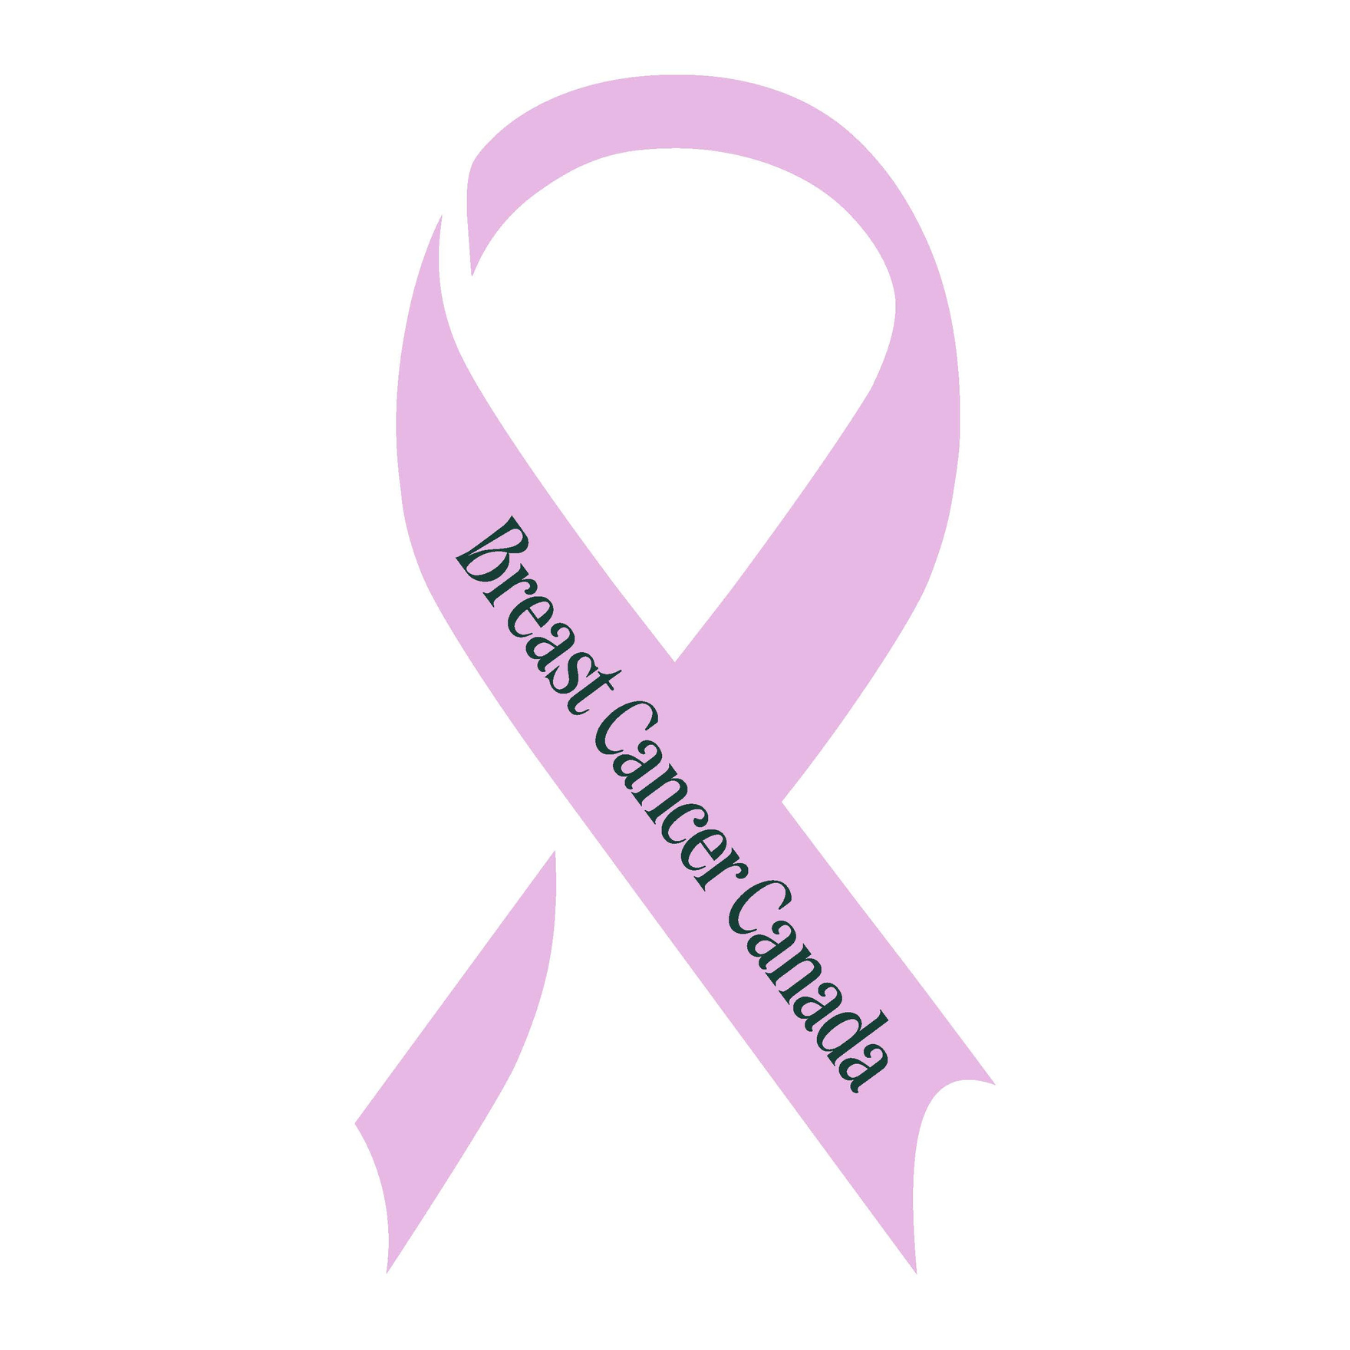 Breast Cancer Canada Donation $5